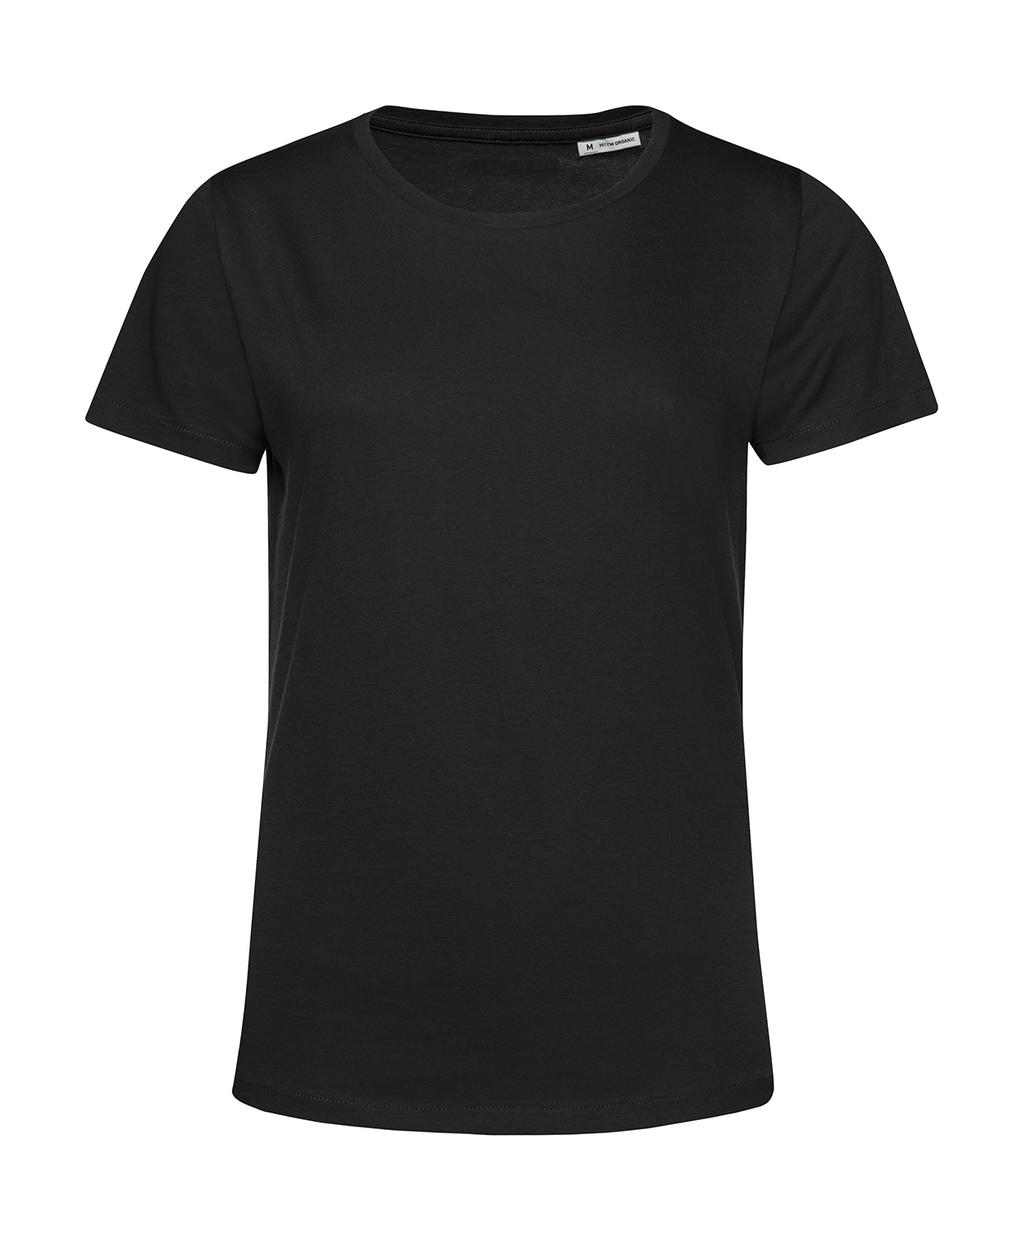 Tričko dámské BC Organic Inspire E150 - černé, XL